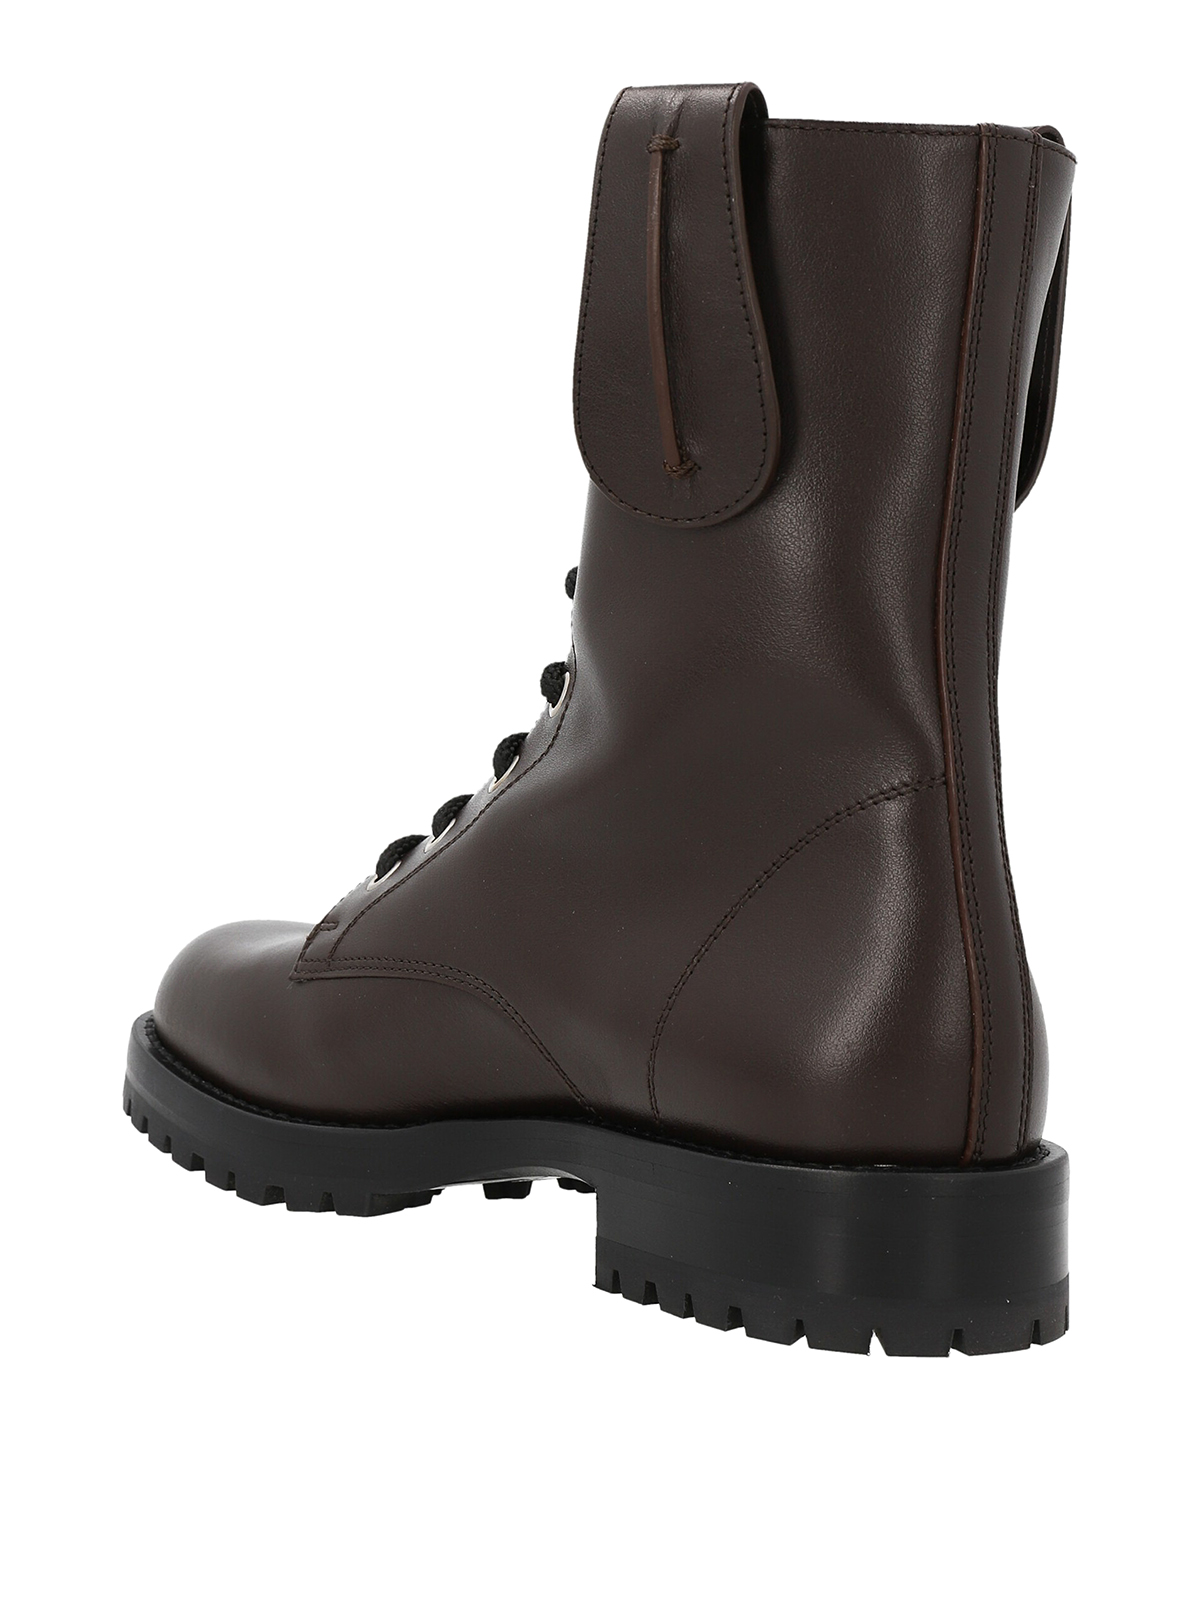 loyaliteit ik ben trots opvolger Ankle boots Rodo - Leather Combat Boots - S0653093COLA | iKRIX.com